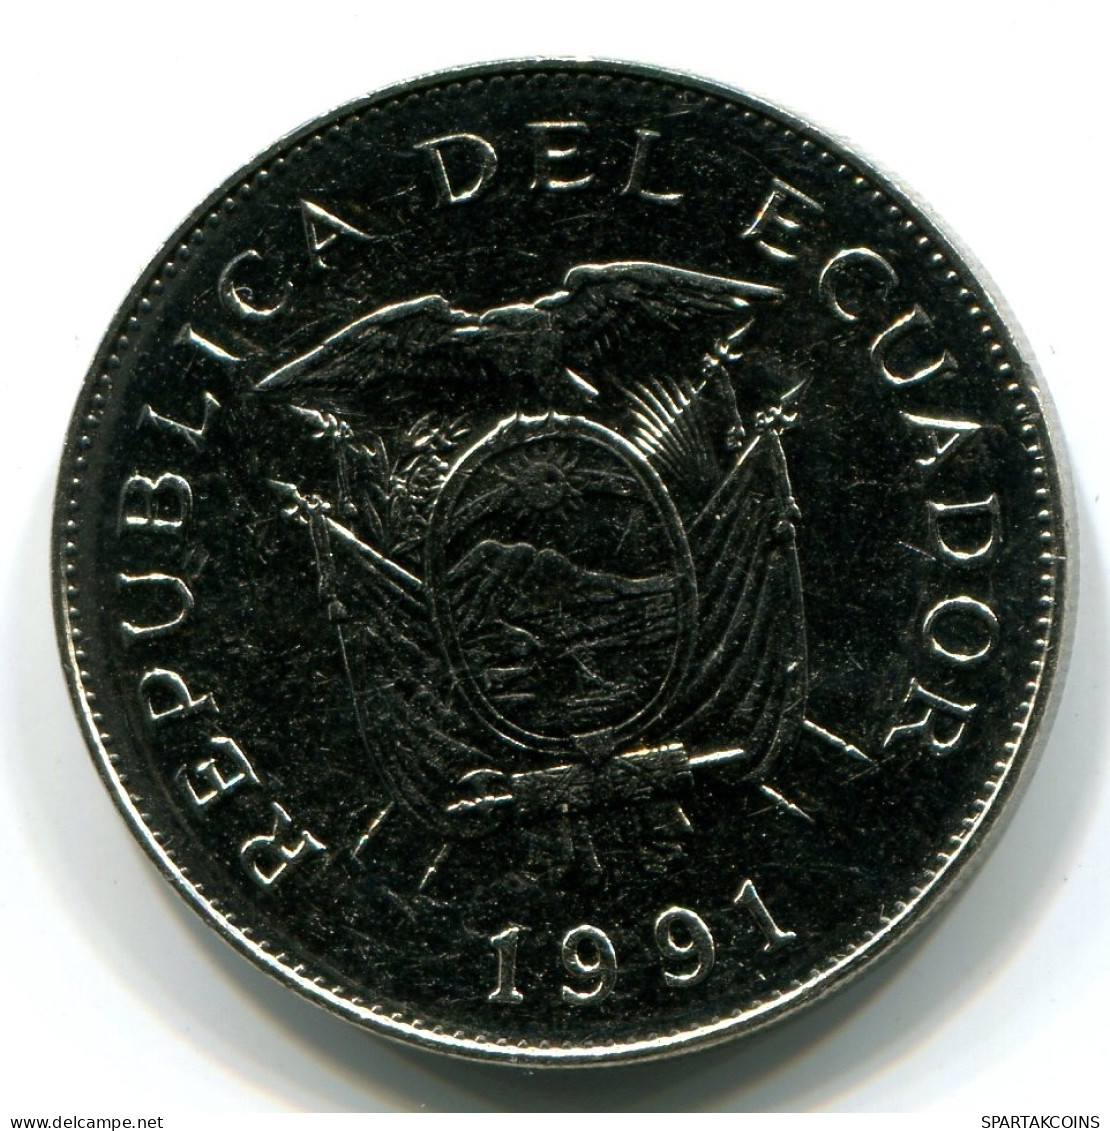 50 SUCRE 1991 ECUADOR UNC Coin #W11019.U - Ecuador